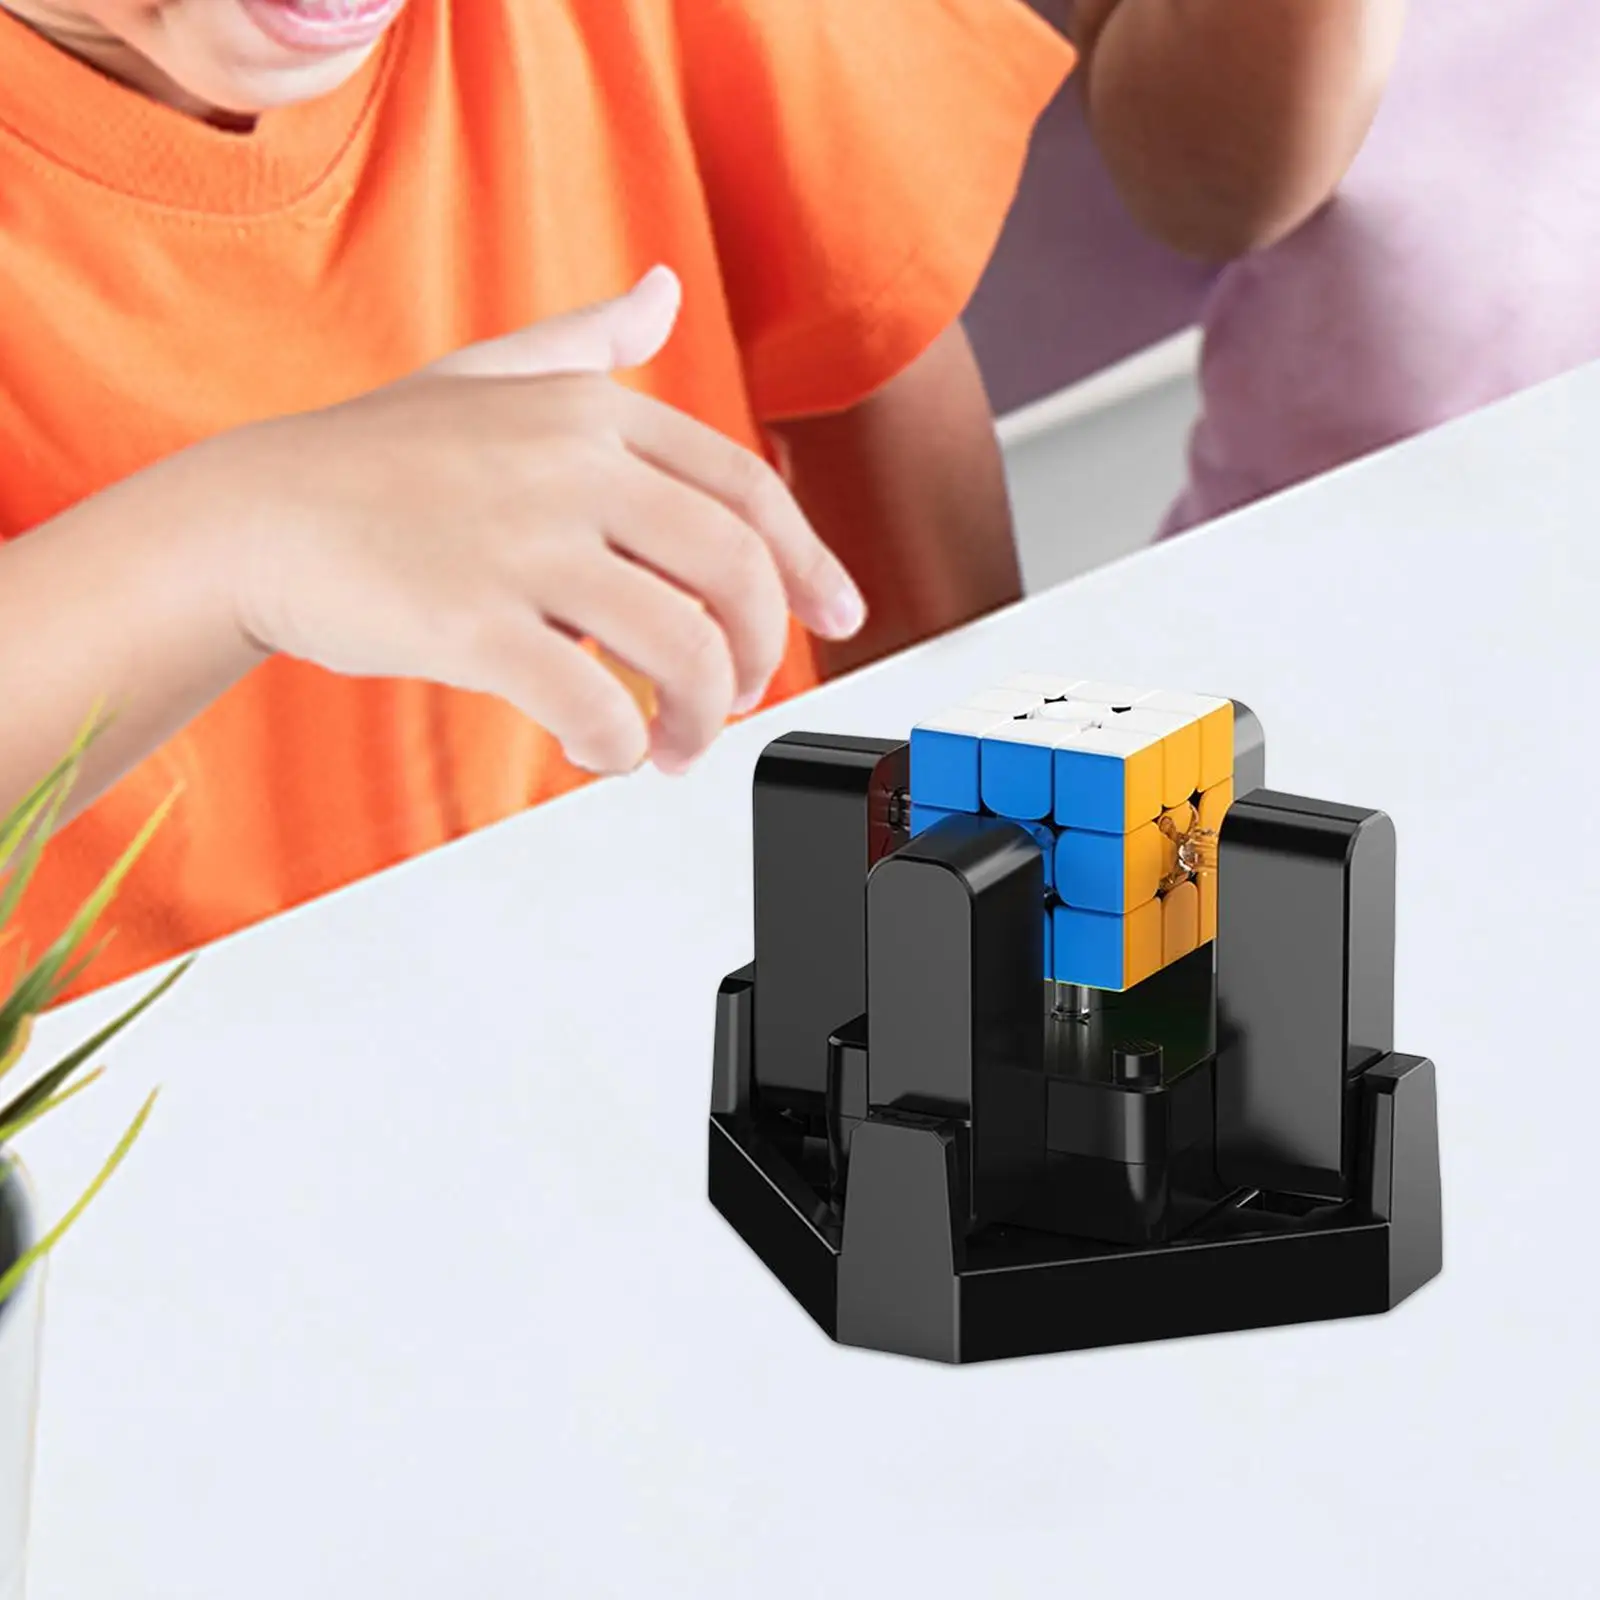 Automatic Puzzle Scrambler 3x3x3 cube Precision Motors Intelligent Tracking Puzzle game Solving Machine